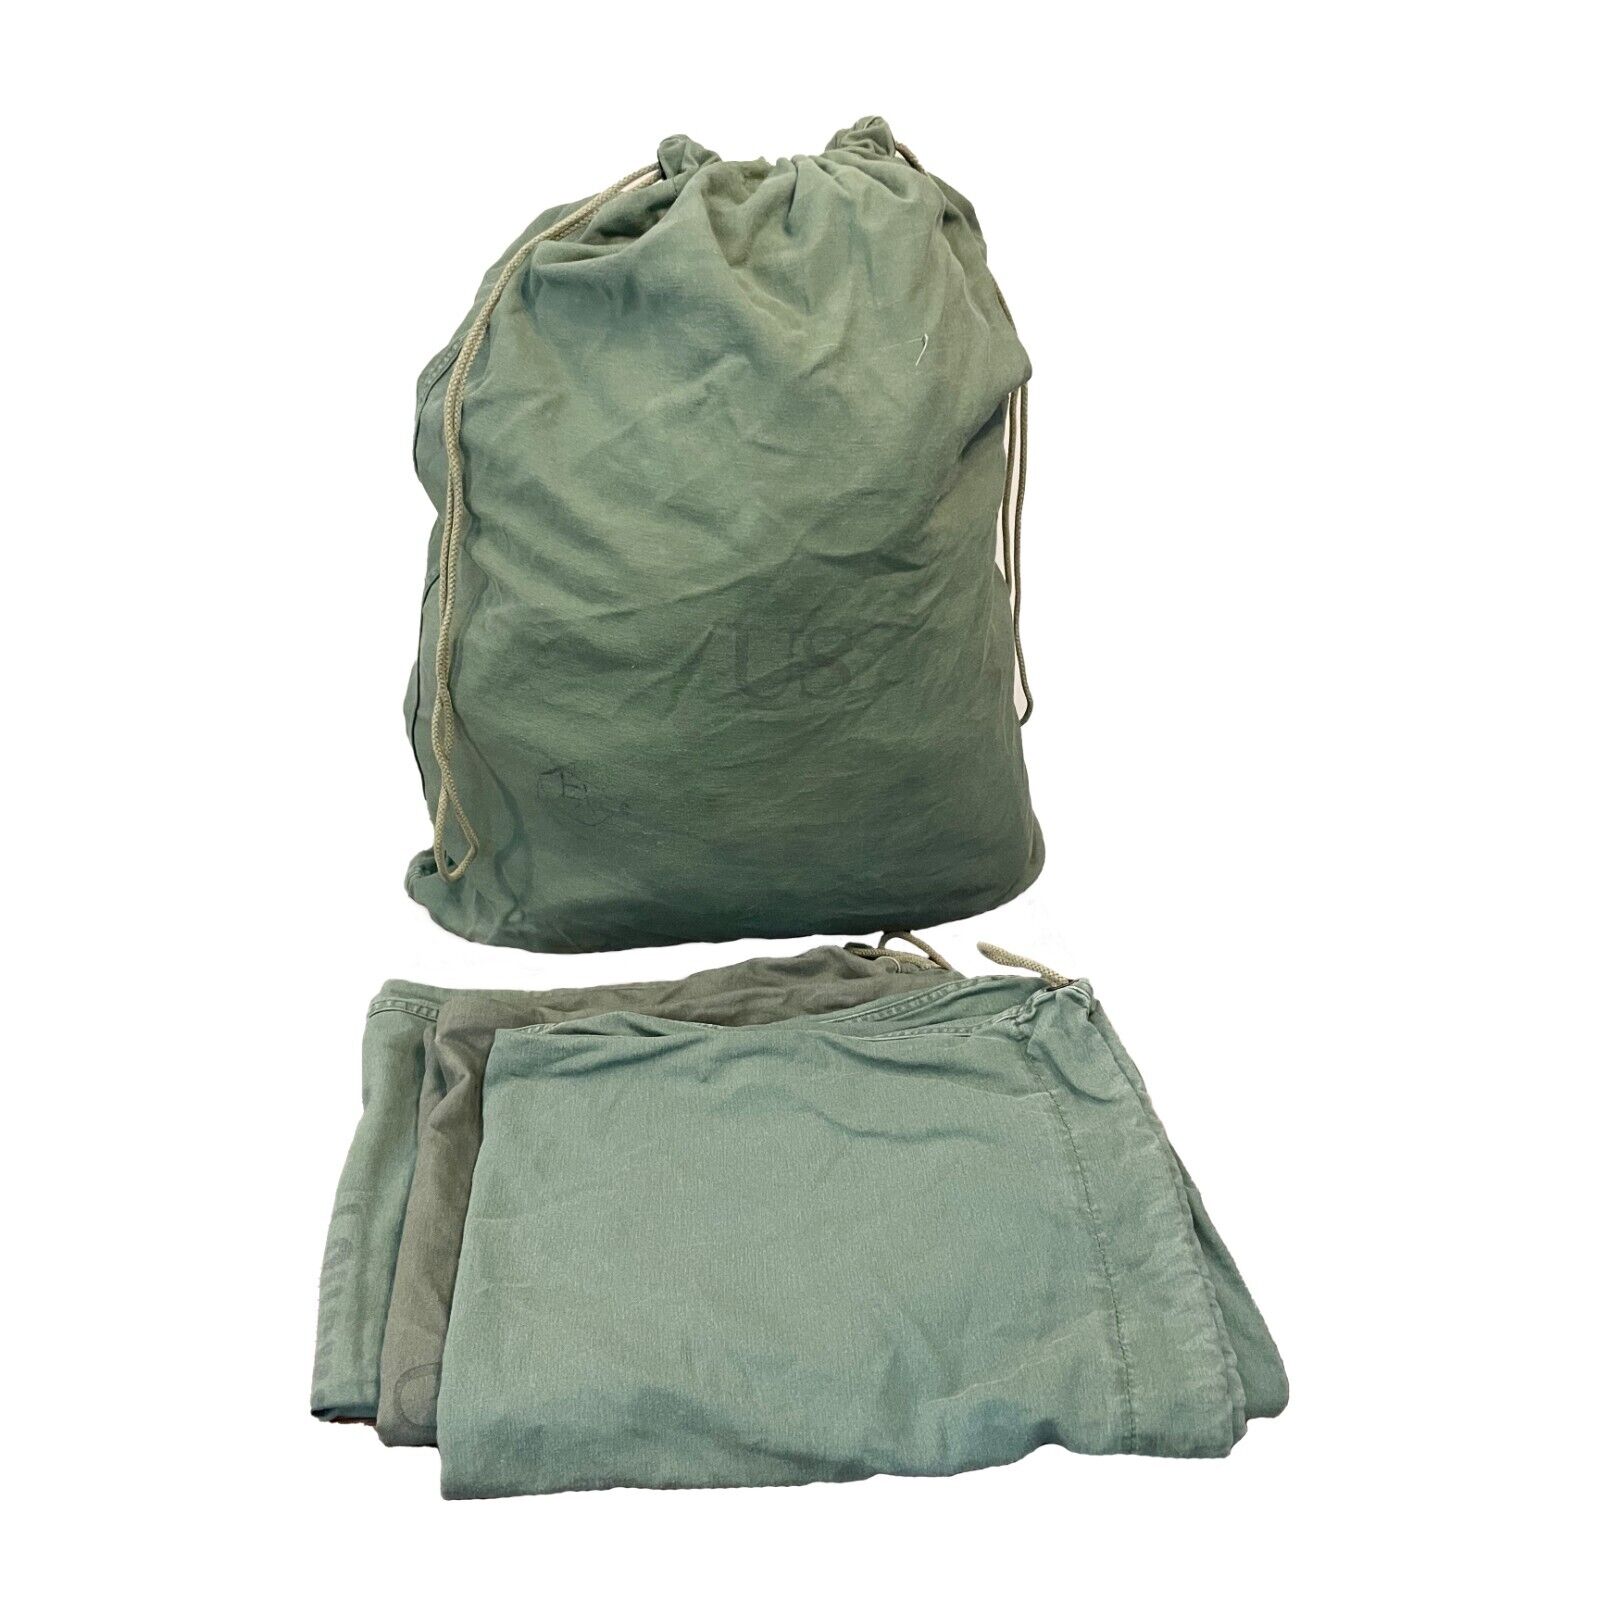 US Army BARRACKS BAG OD Green 100% Cotton Large Laundry Bag Military USGI